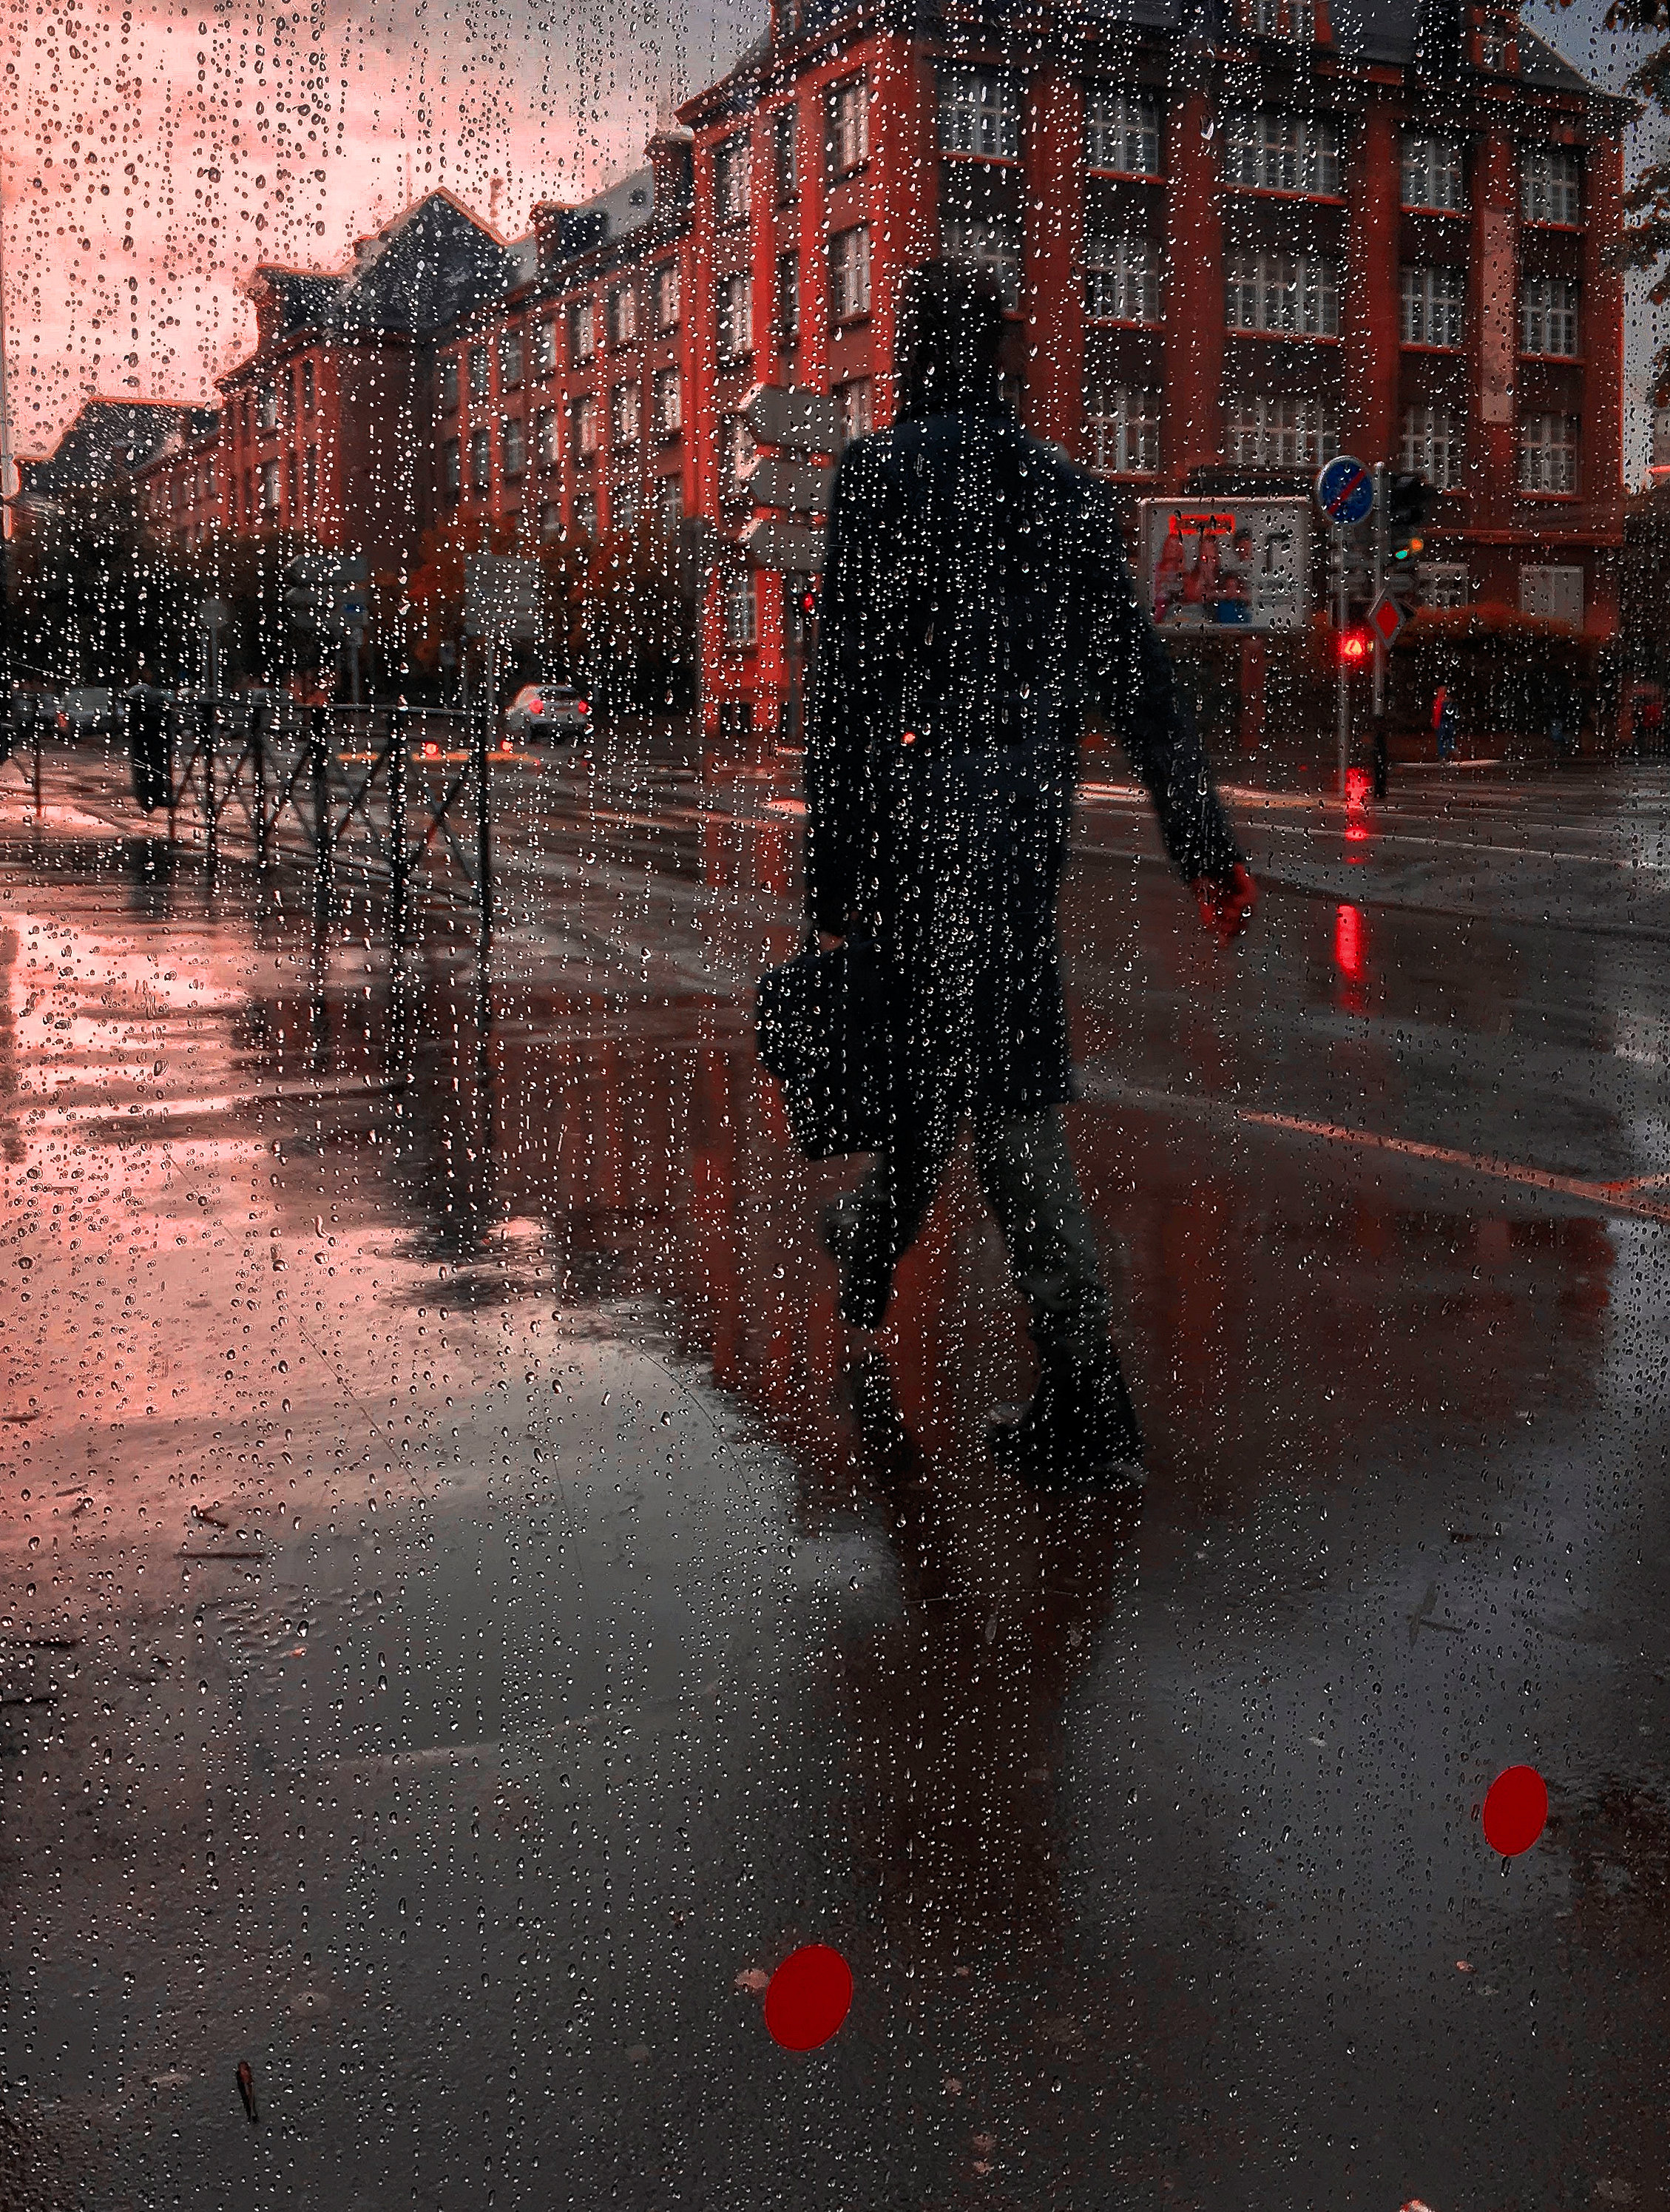 New Lock Screen Wallpapers rain, miscellanea, drops, city, silhouette, miscellaneous, wet